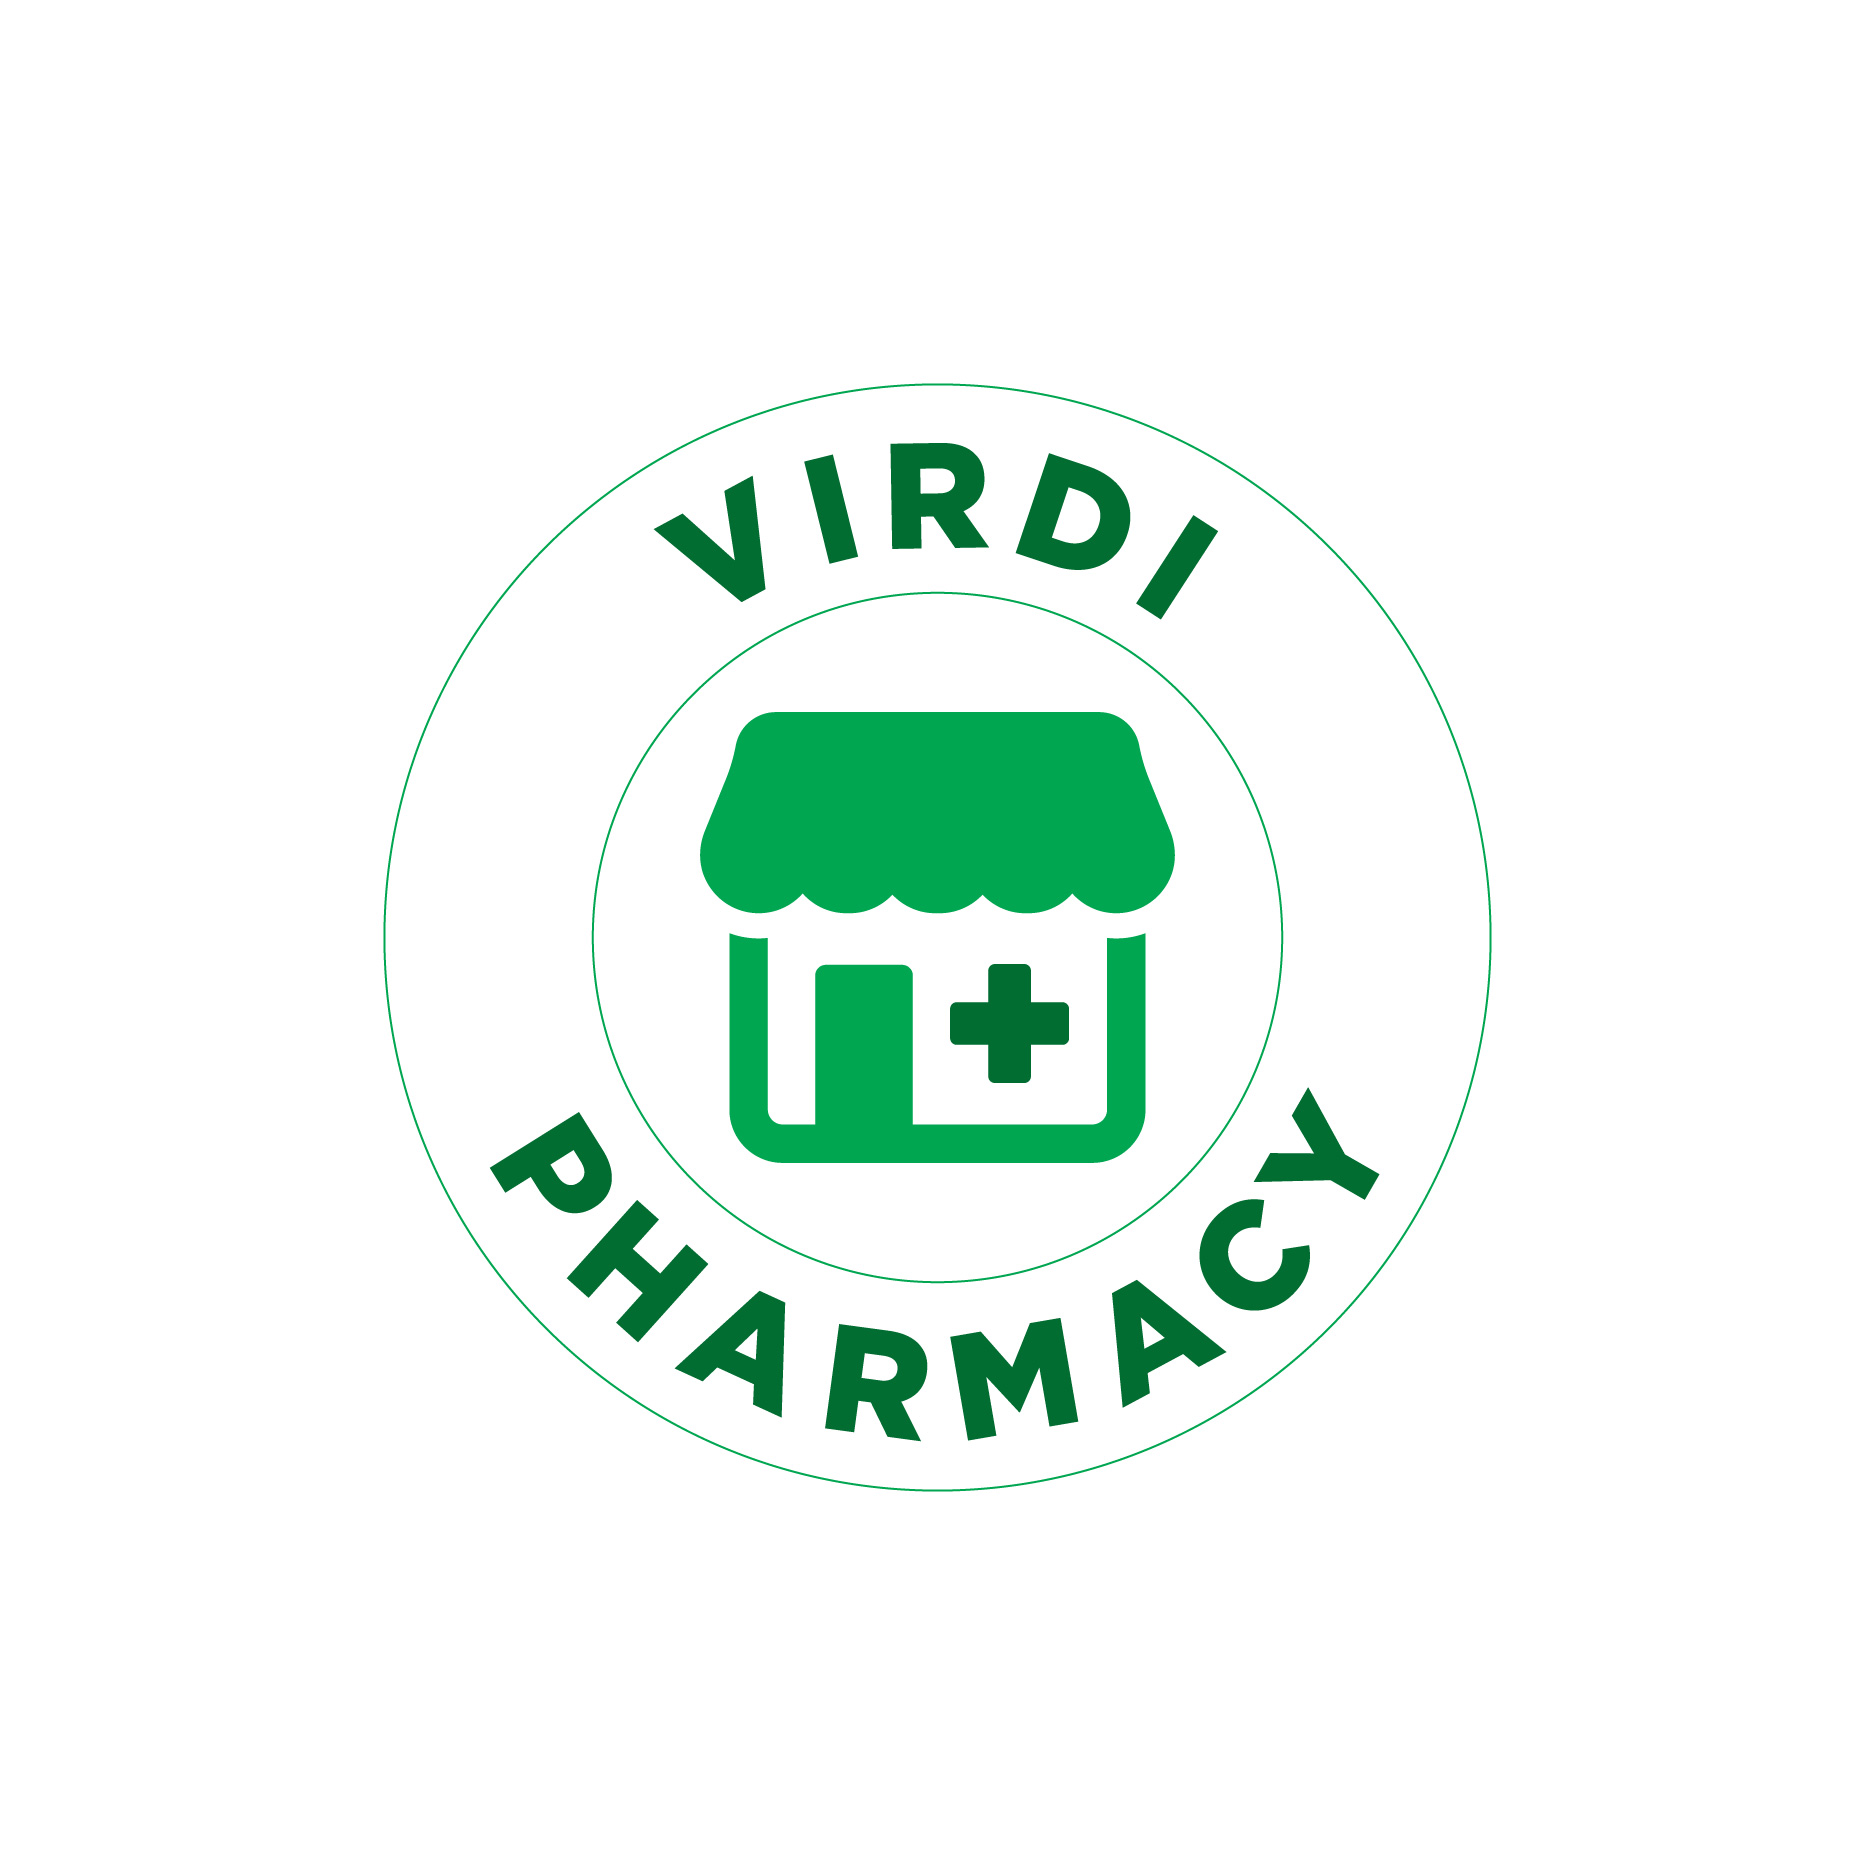 Virdi Pharmacy